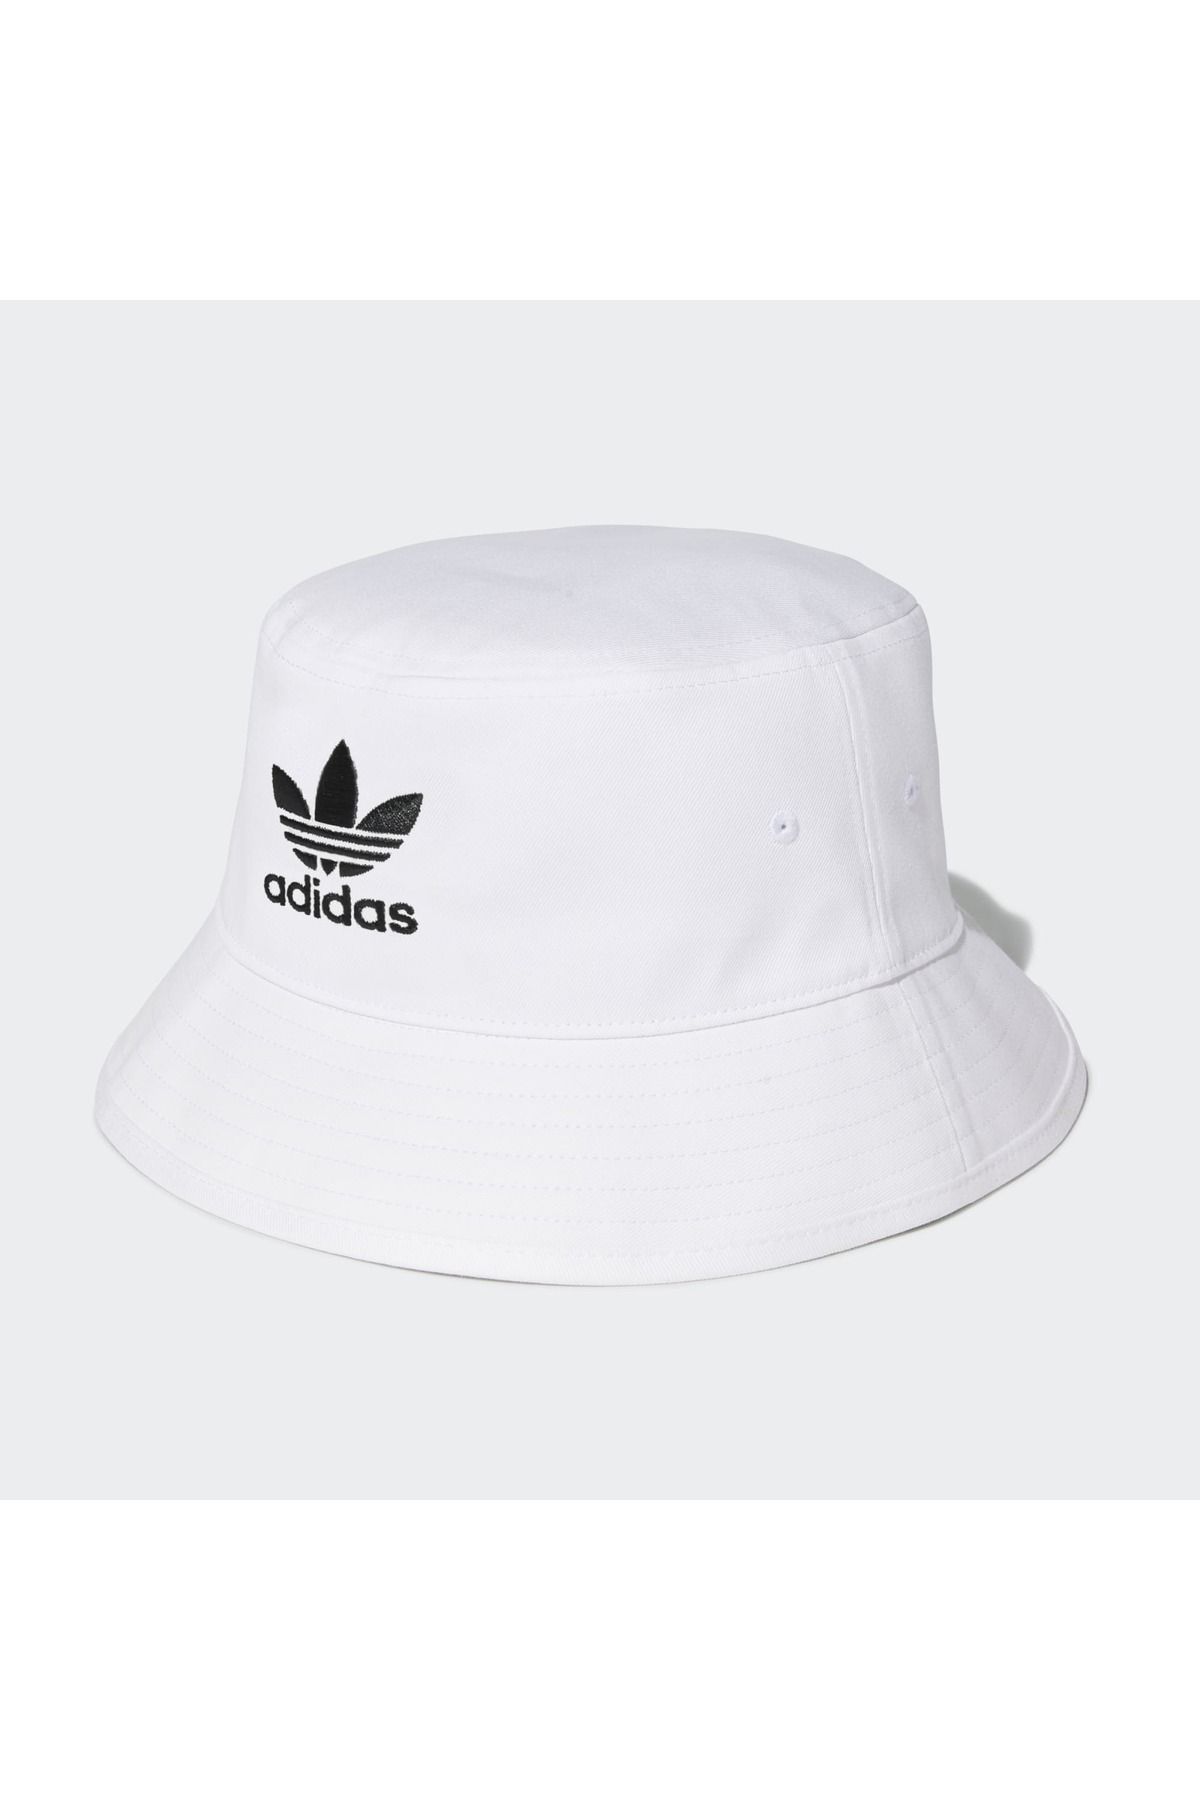 adidas Adicolor Trefoil Beyaz Şapka (FQ4641)